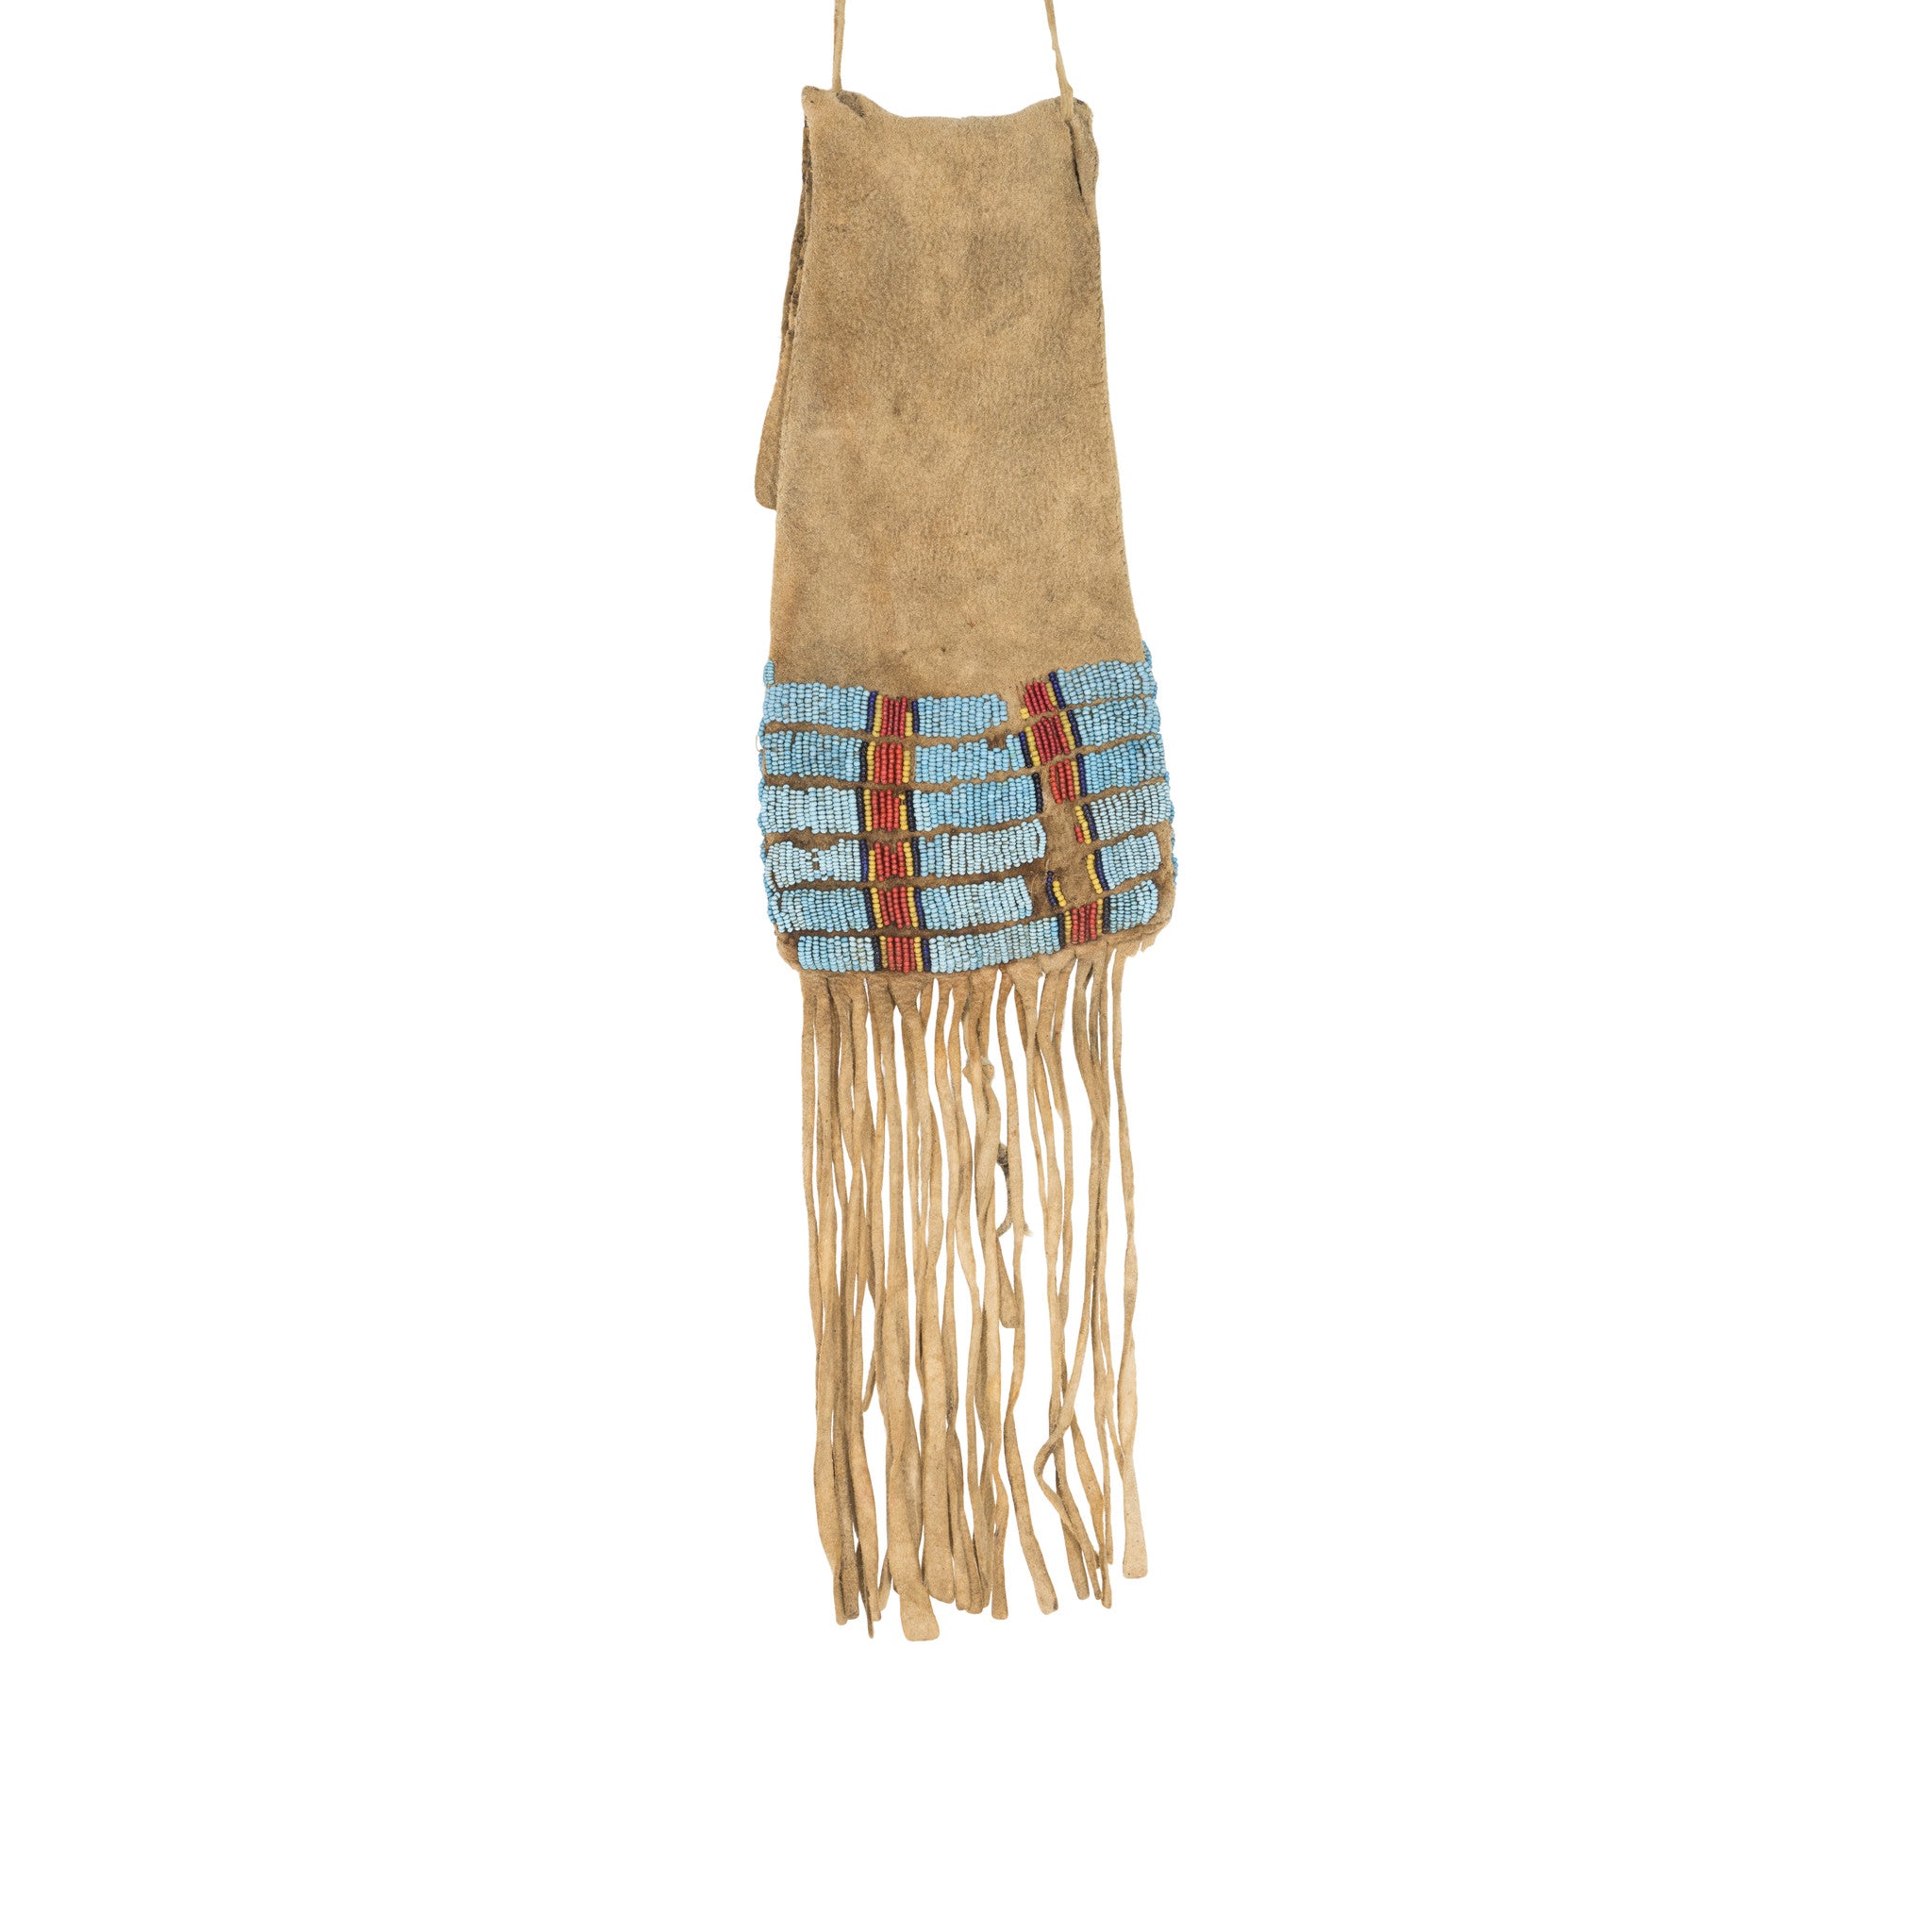 Early Nez Perce Pipe Bag